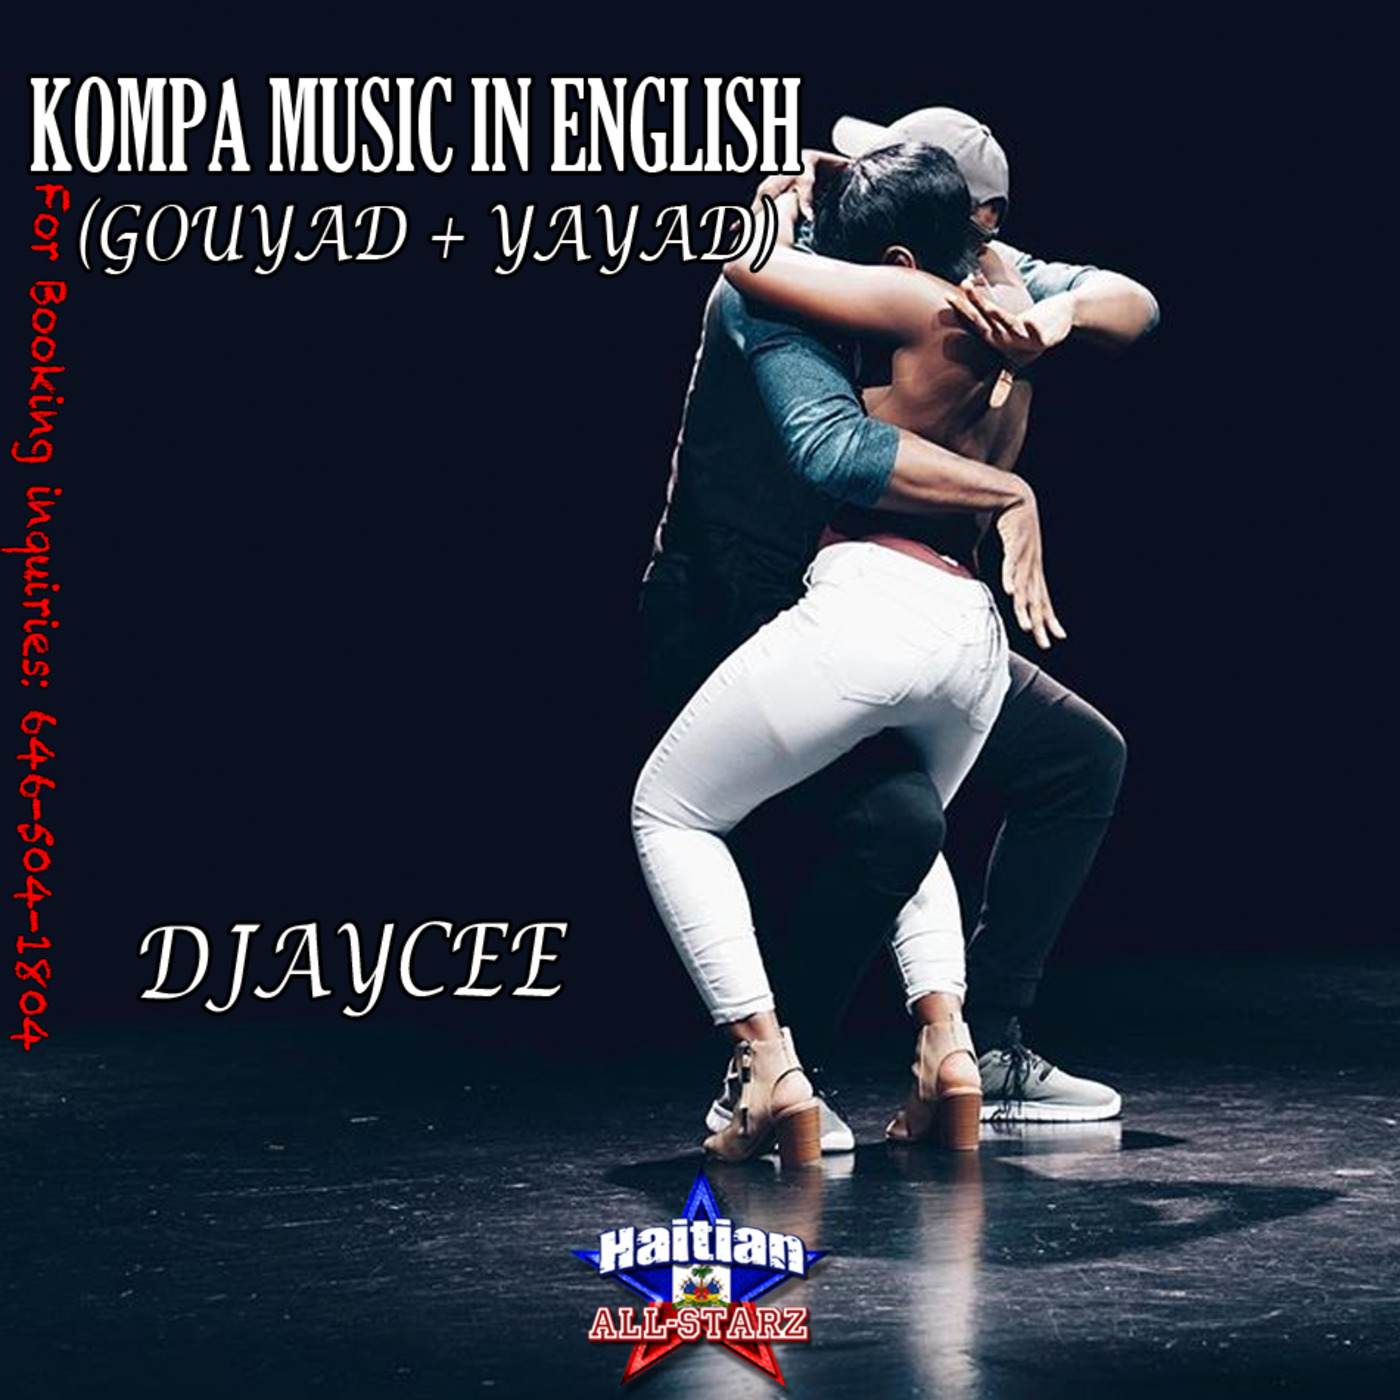 Episode 138: Kompa Music In English (Gouyad + Yayad) - DJayCee